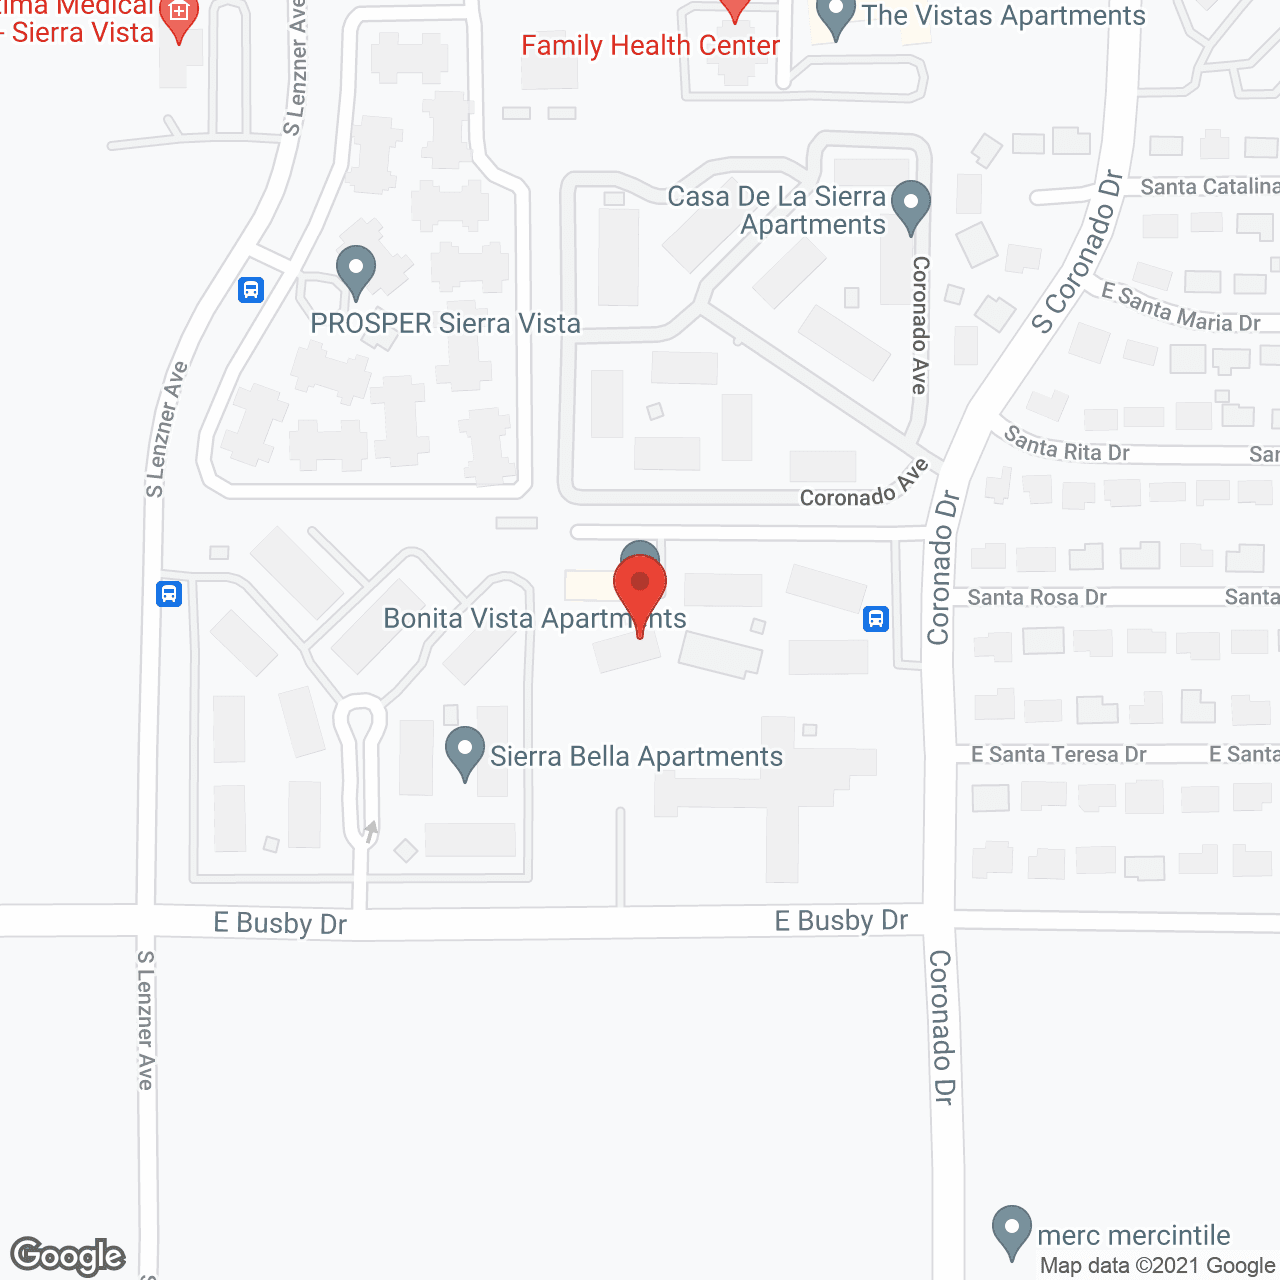 Bonita Vista Apartments in google map